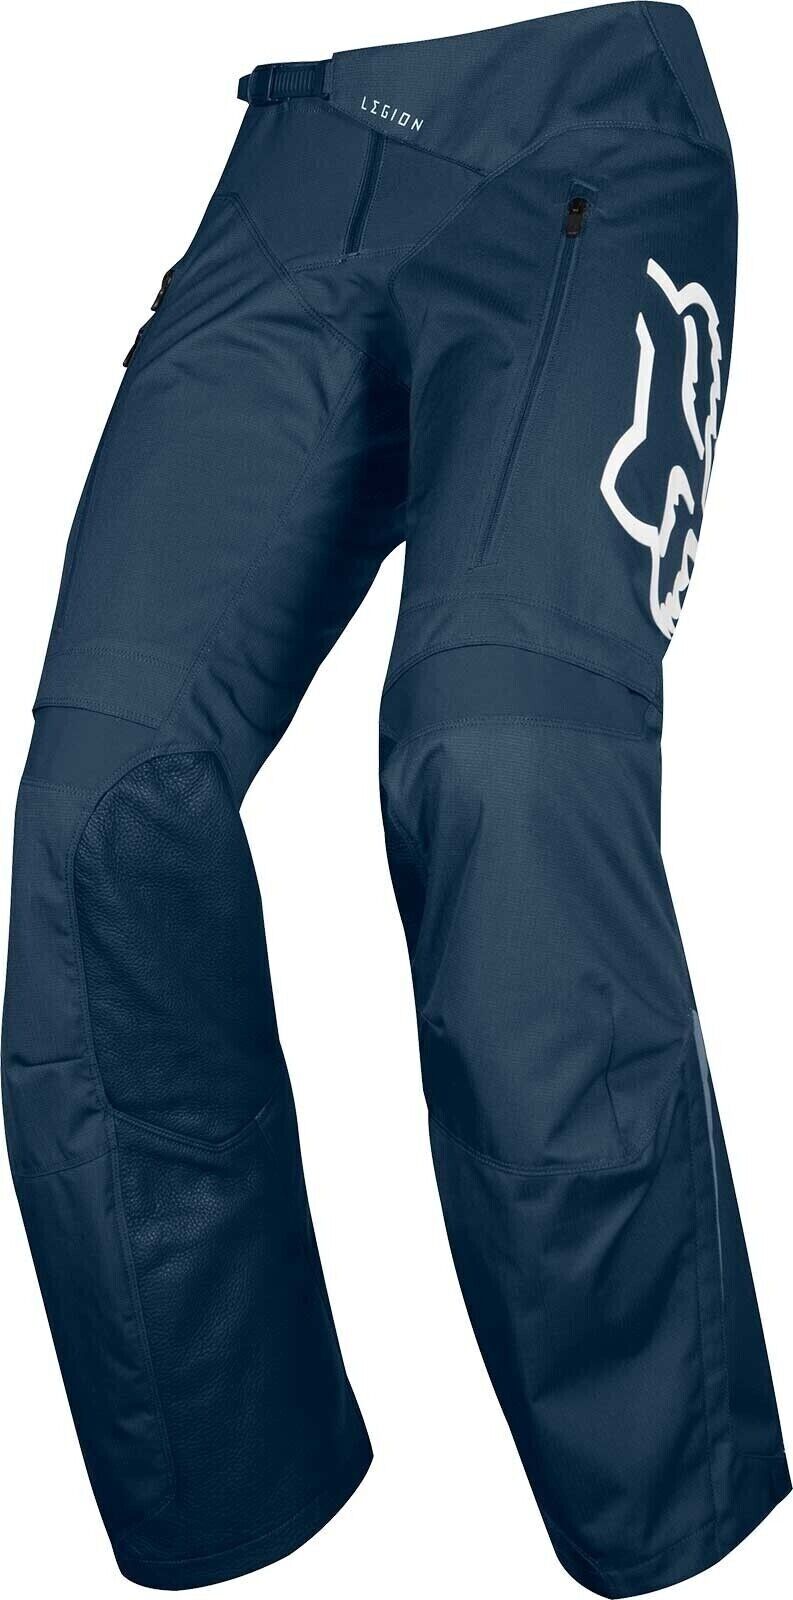 2020 Fox Racing Legion EX Pants Size 32 MX/ATV/OFFROAD